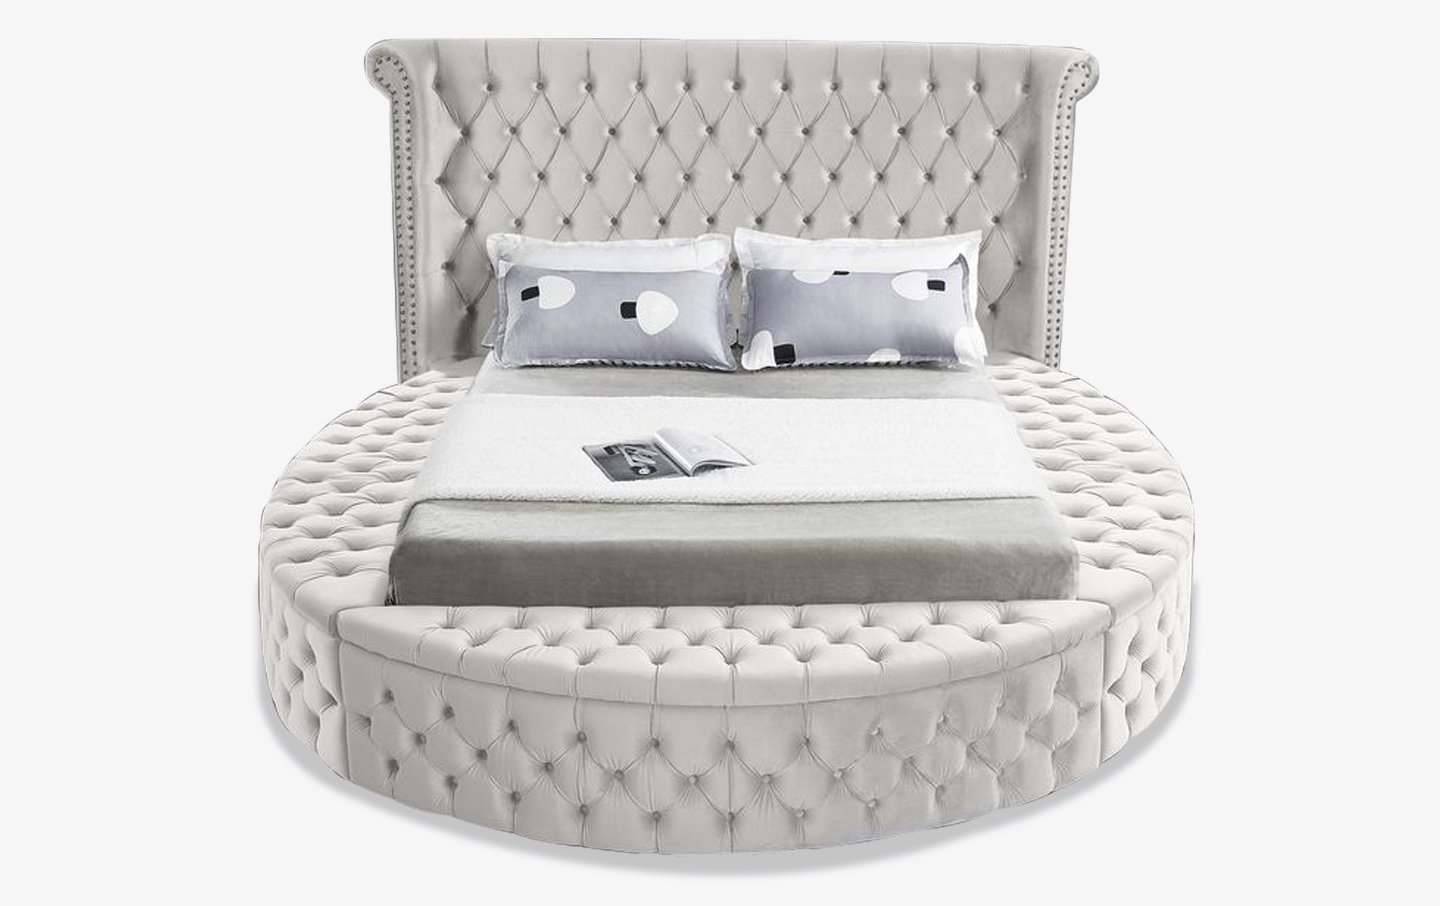 Luxus Cream Round Bed